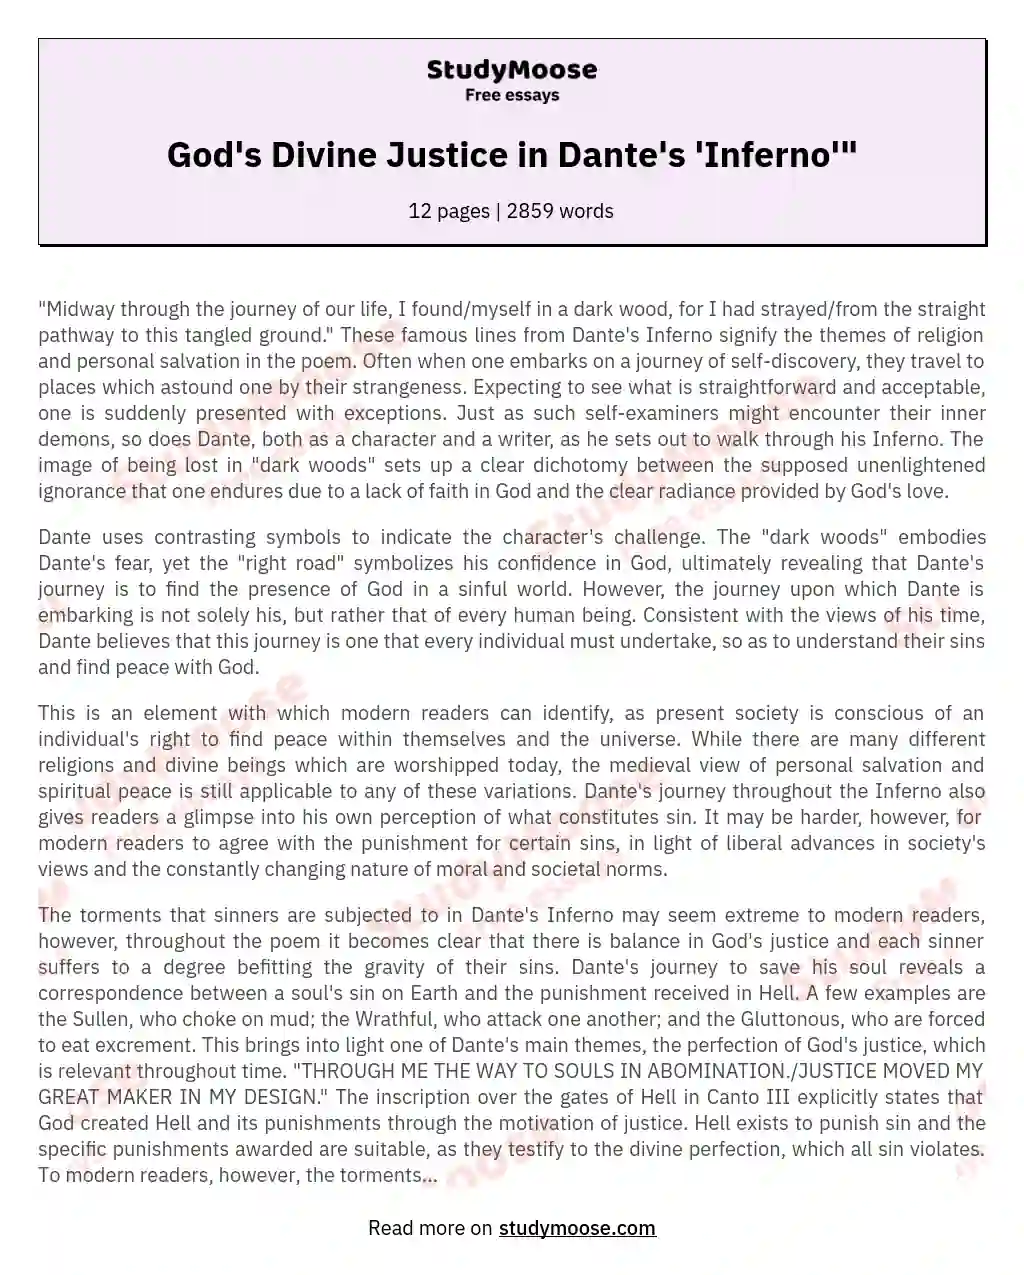 God's Divine Justice in Dante's 'Inferno'" essay